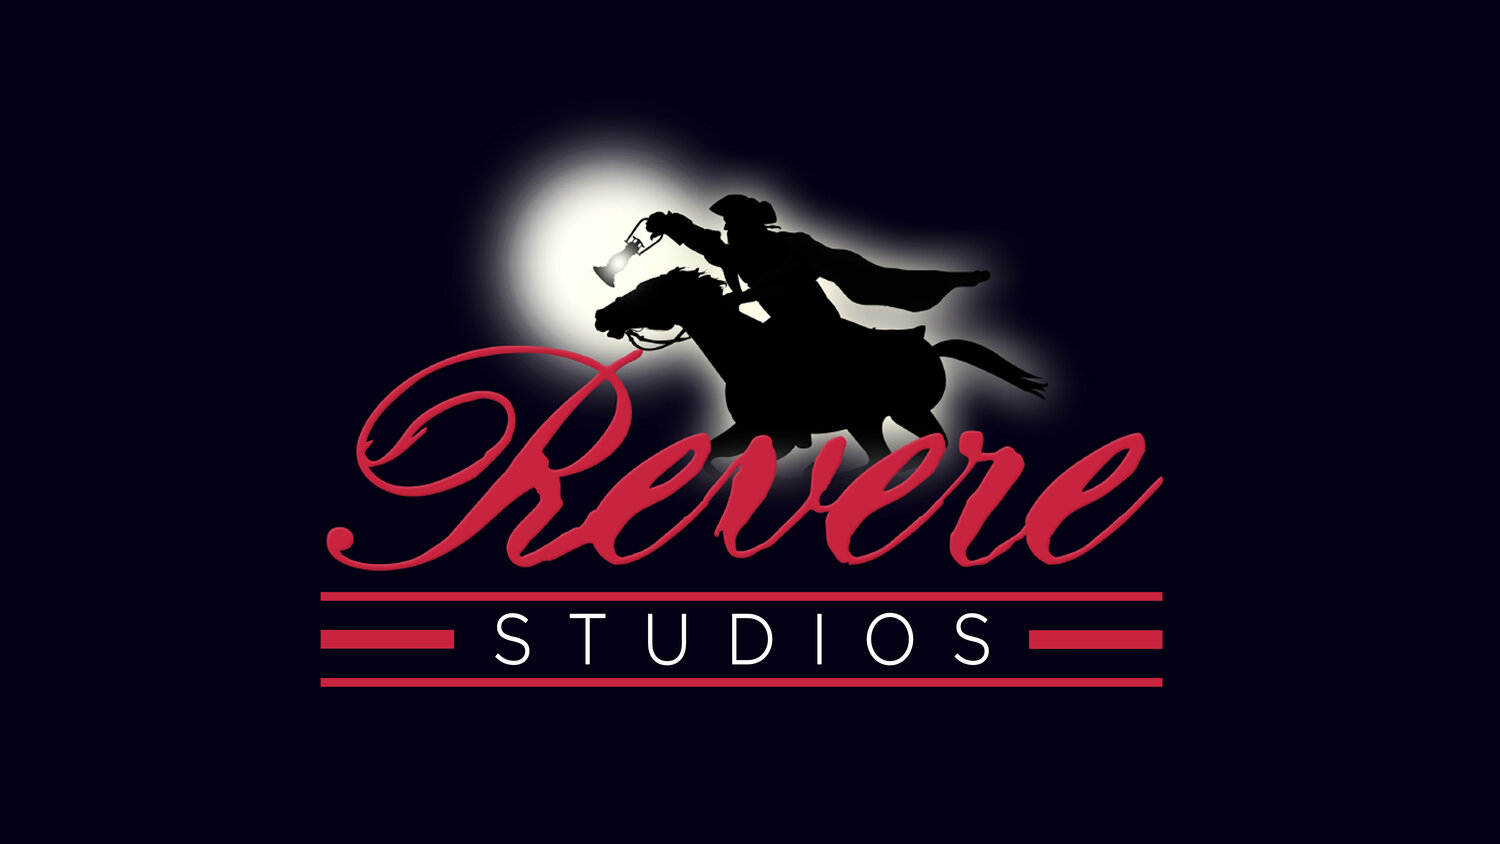 Revere Studios